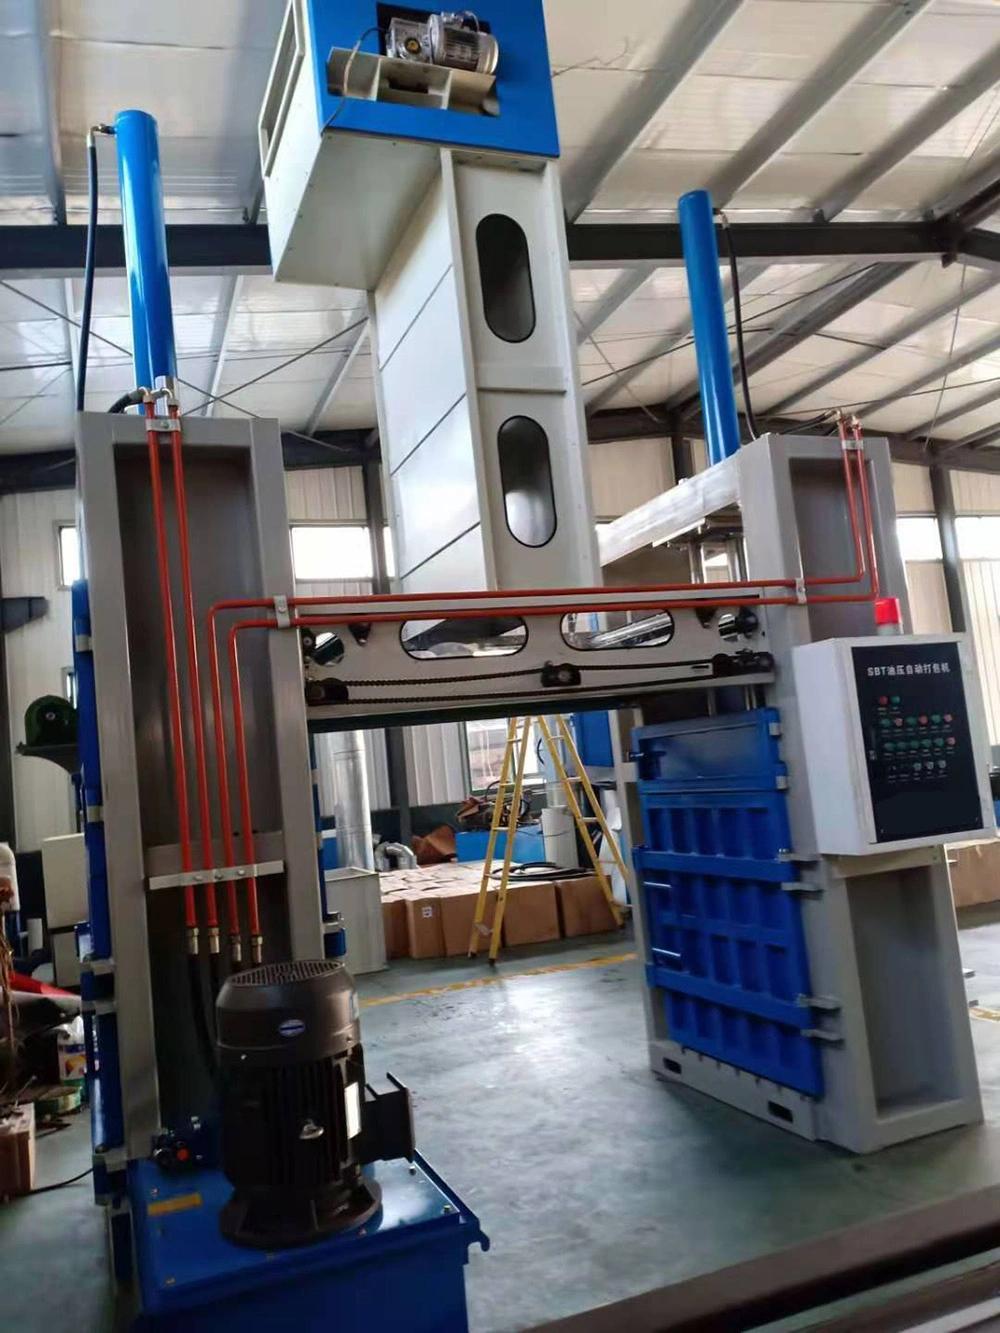 Vertical Pressure Balance System Baler Hydraulic Press Waste Plastic Film Packaging Machine Factory Price Baler